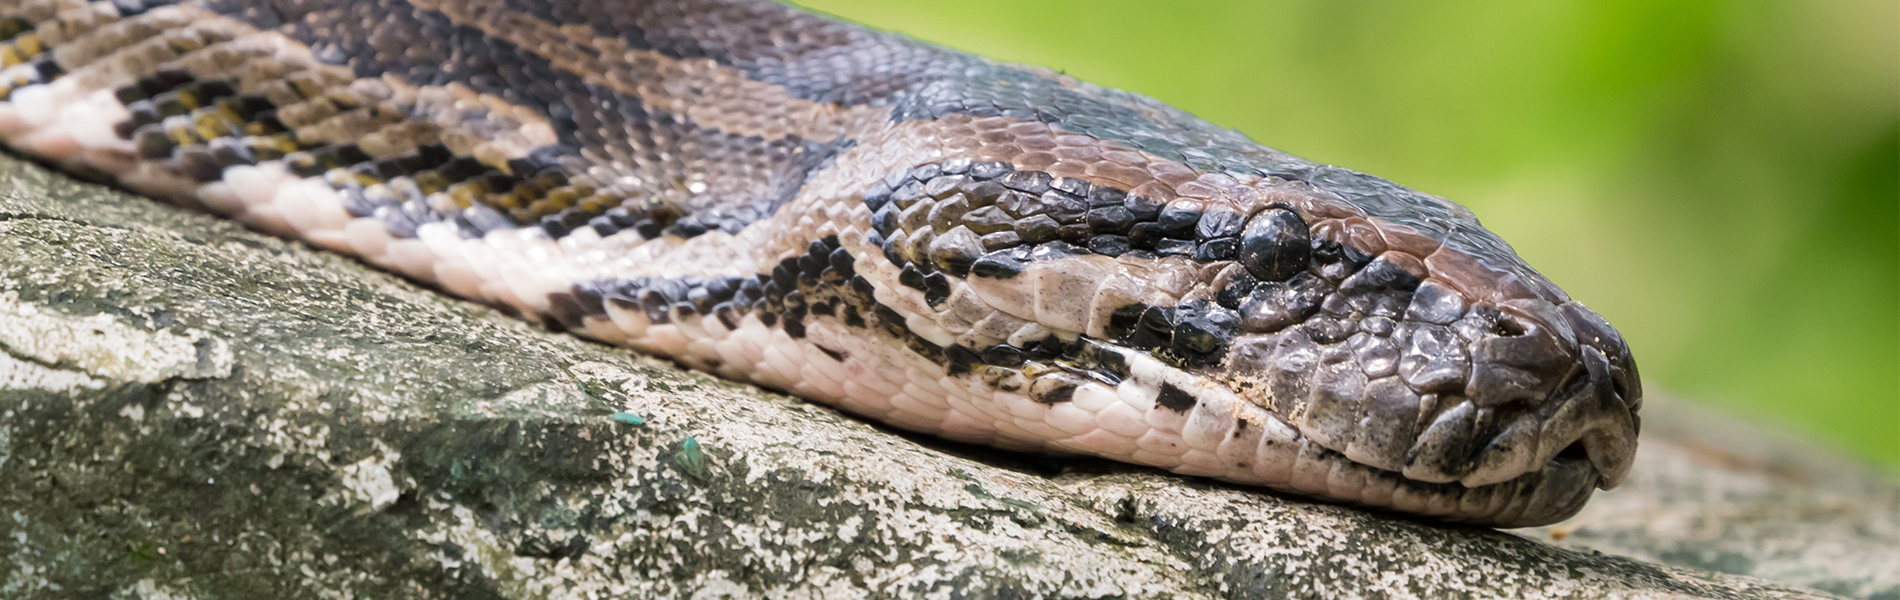 Gradlyn Petshipping Header Tiertransport Tigerpython Schlange Snake Reptilien